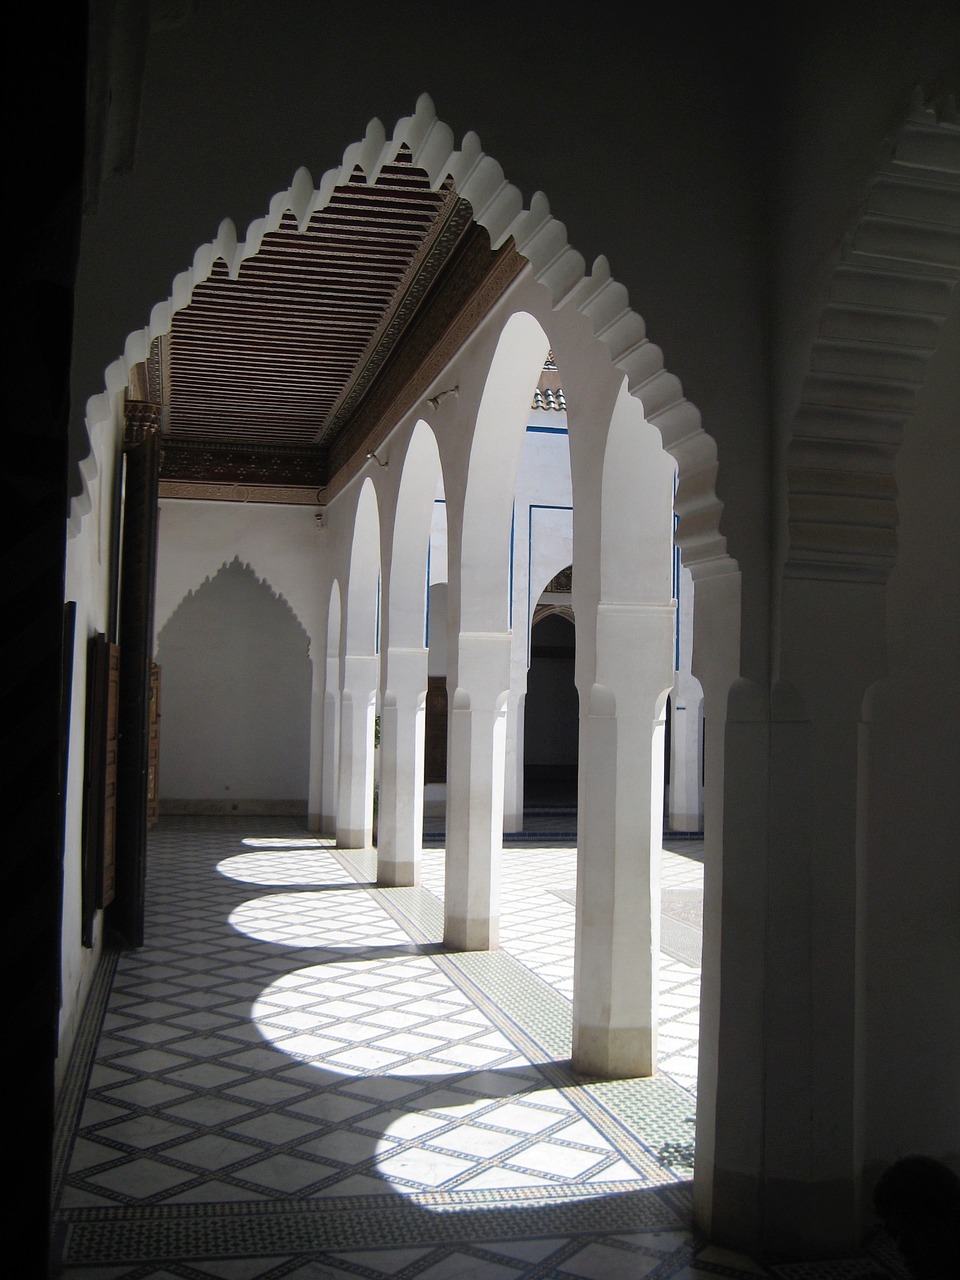 morrocco archway shadows free photo